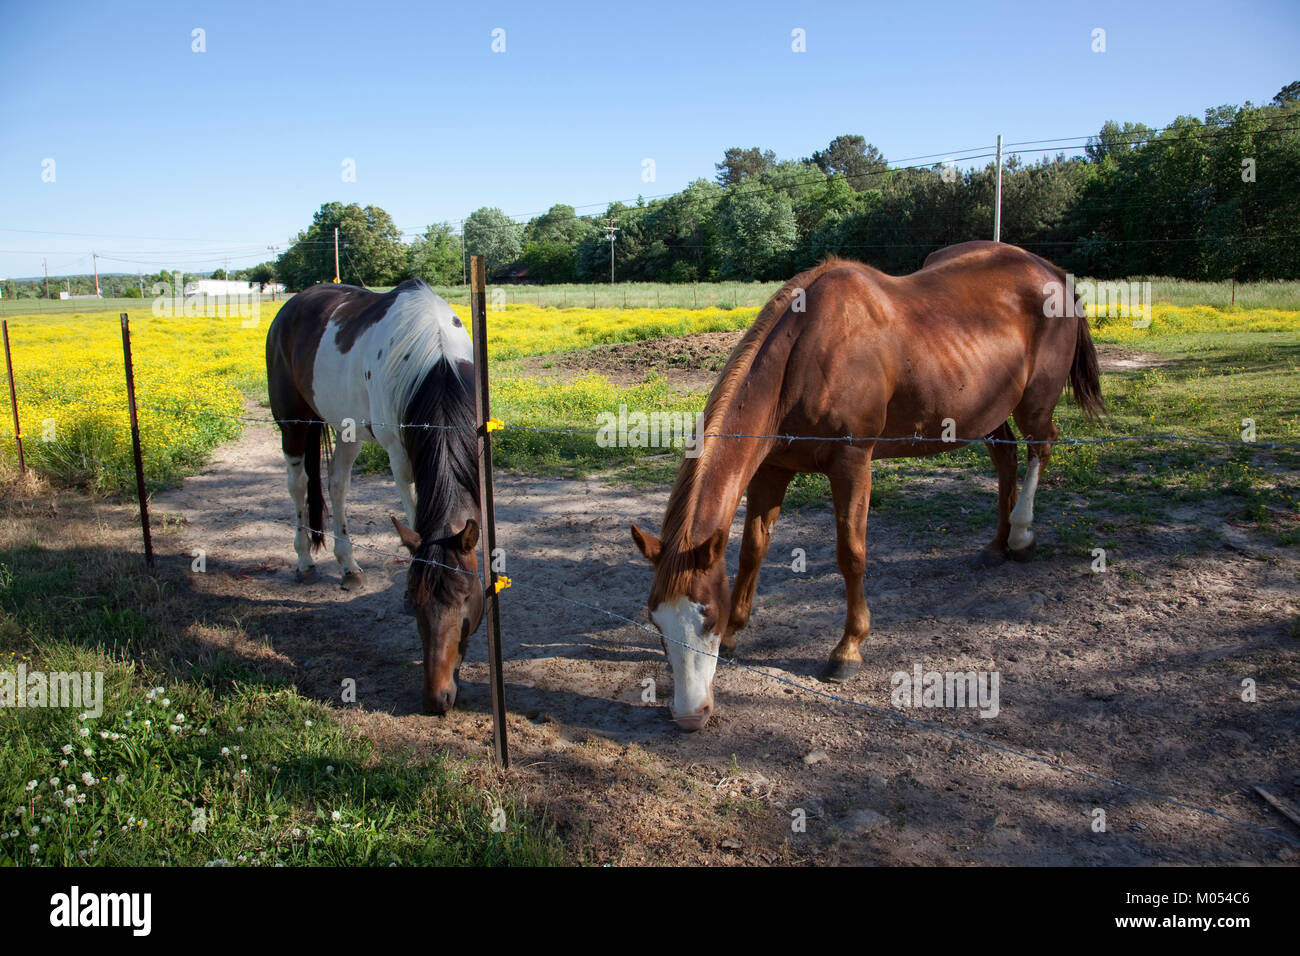 Horses in Rural Alabama Stock Photo